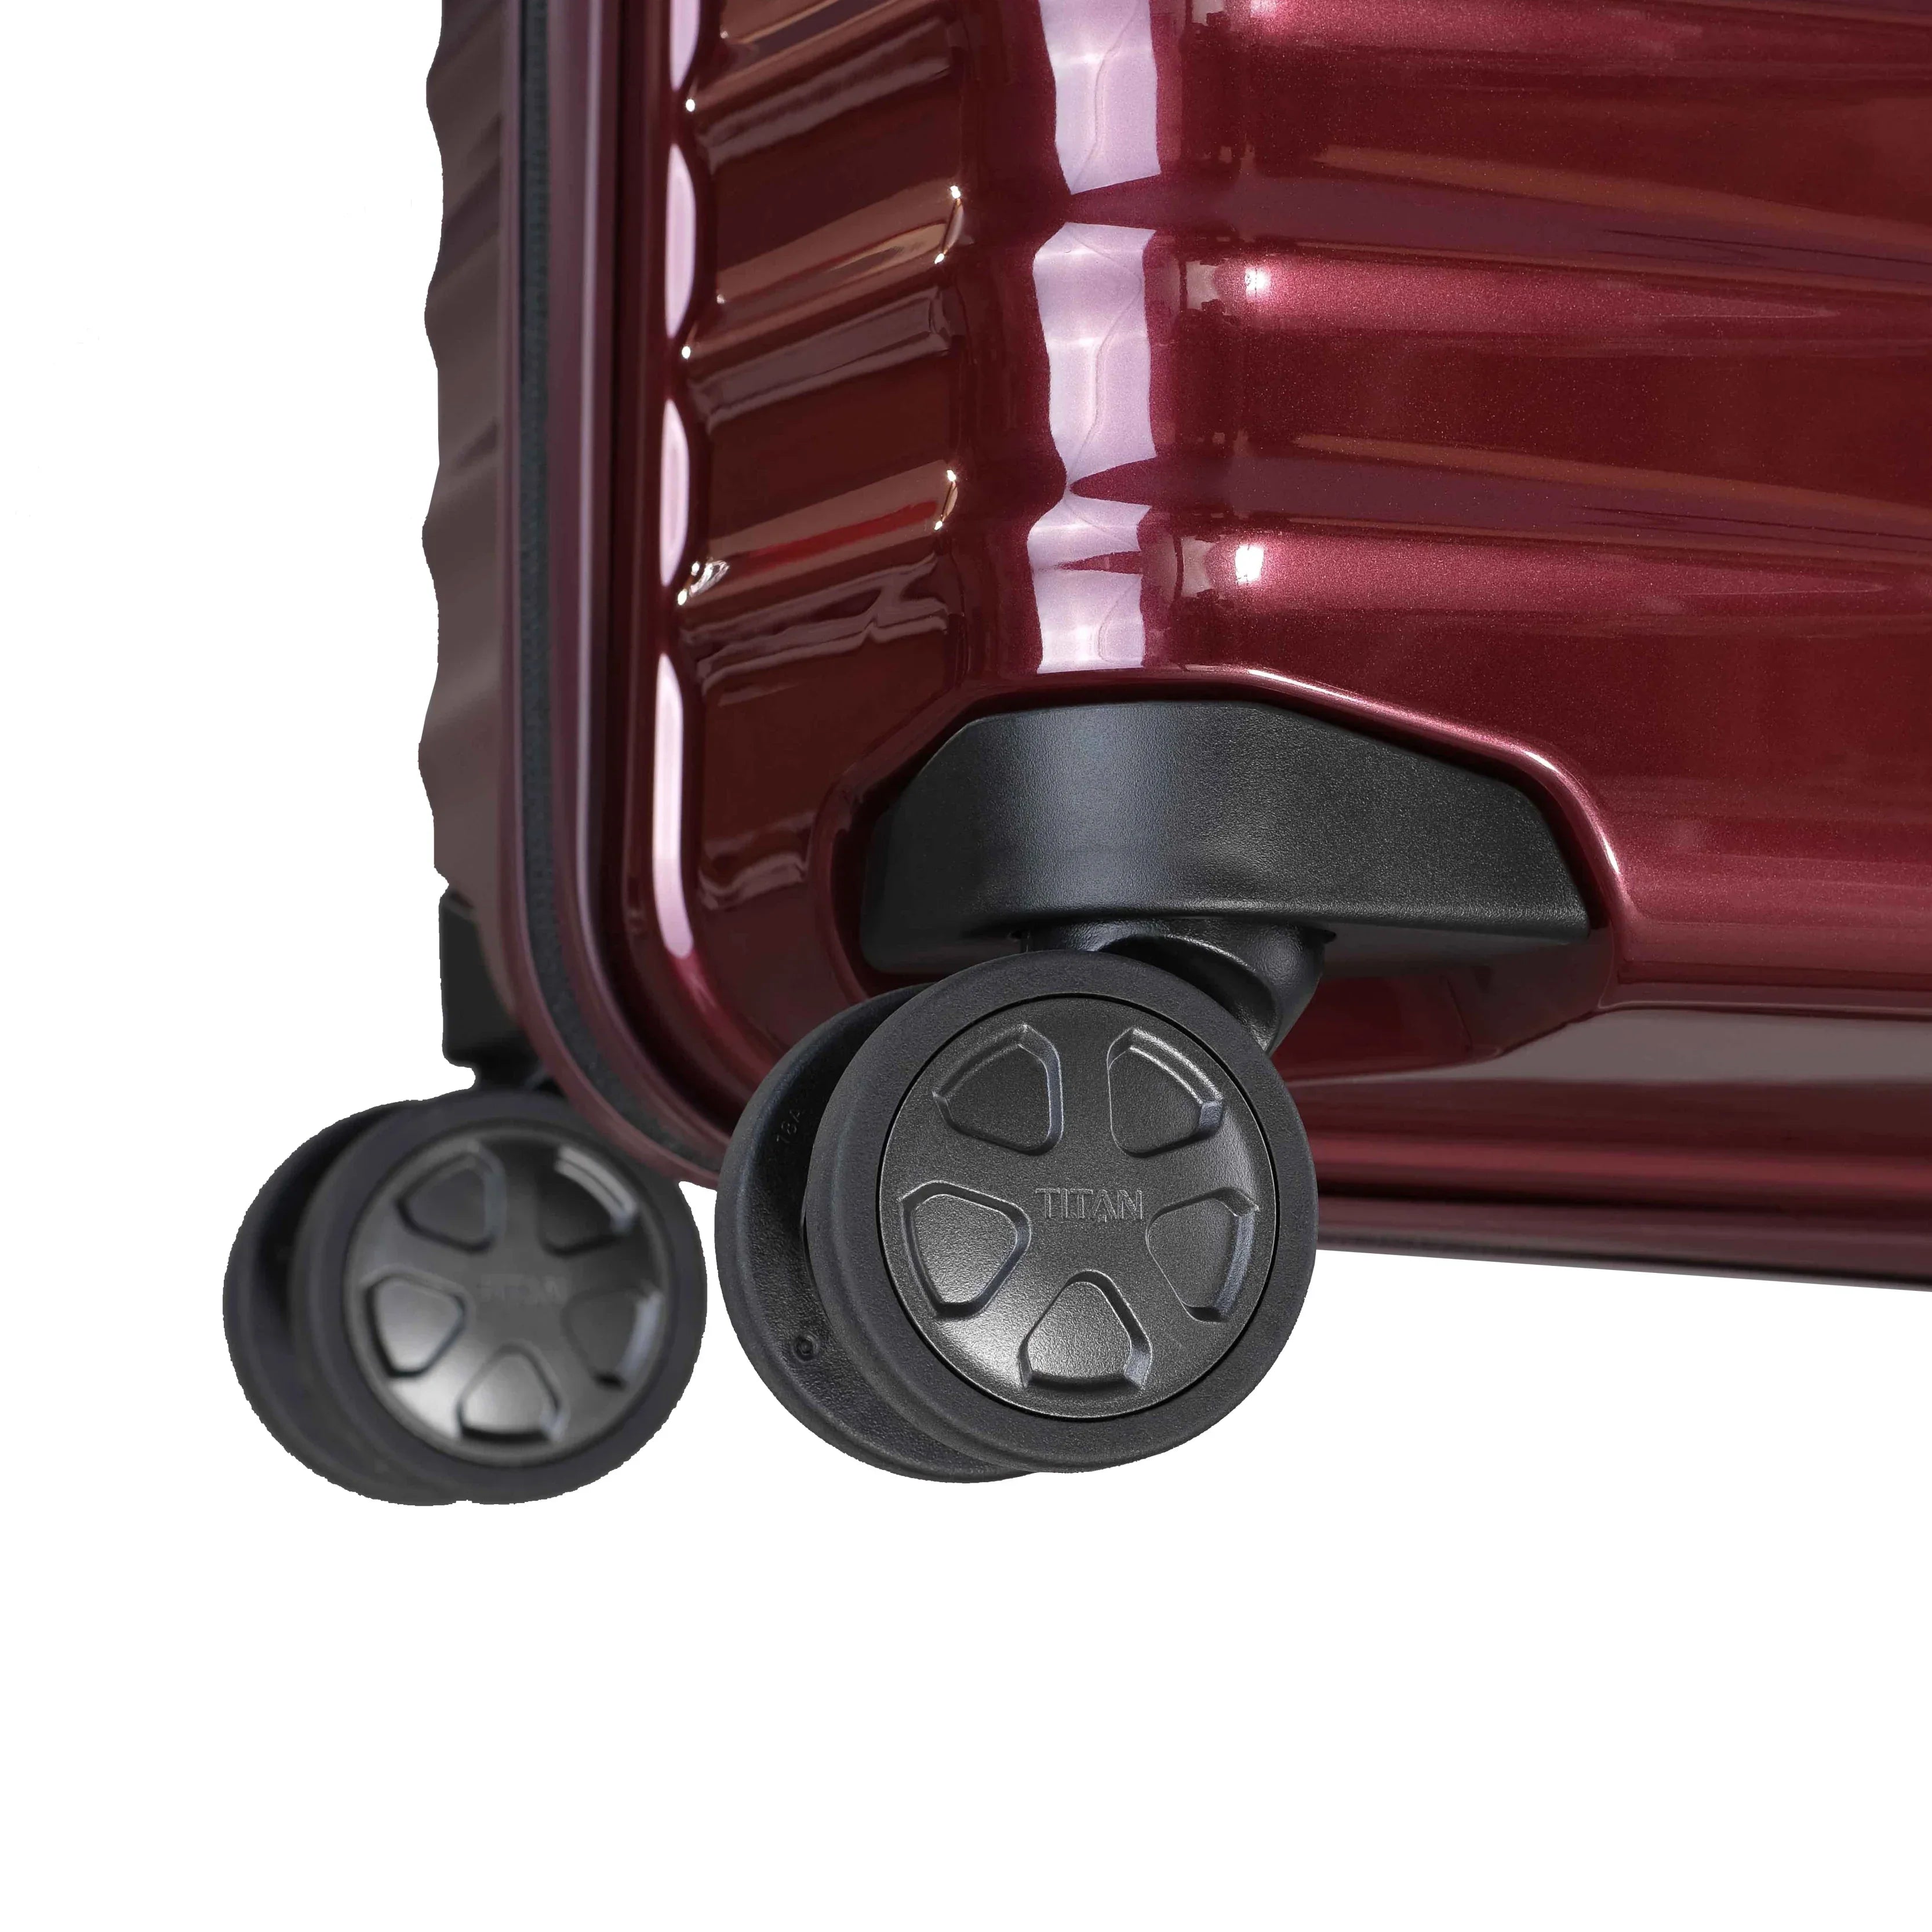 Titan Litron 4w Trolley S - Cherry red